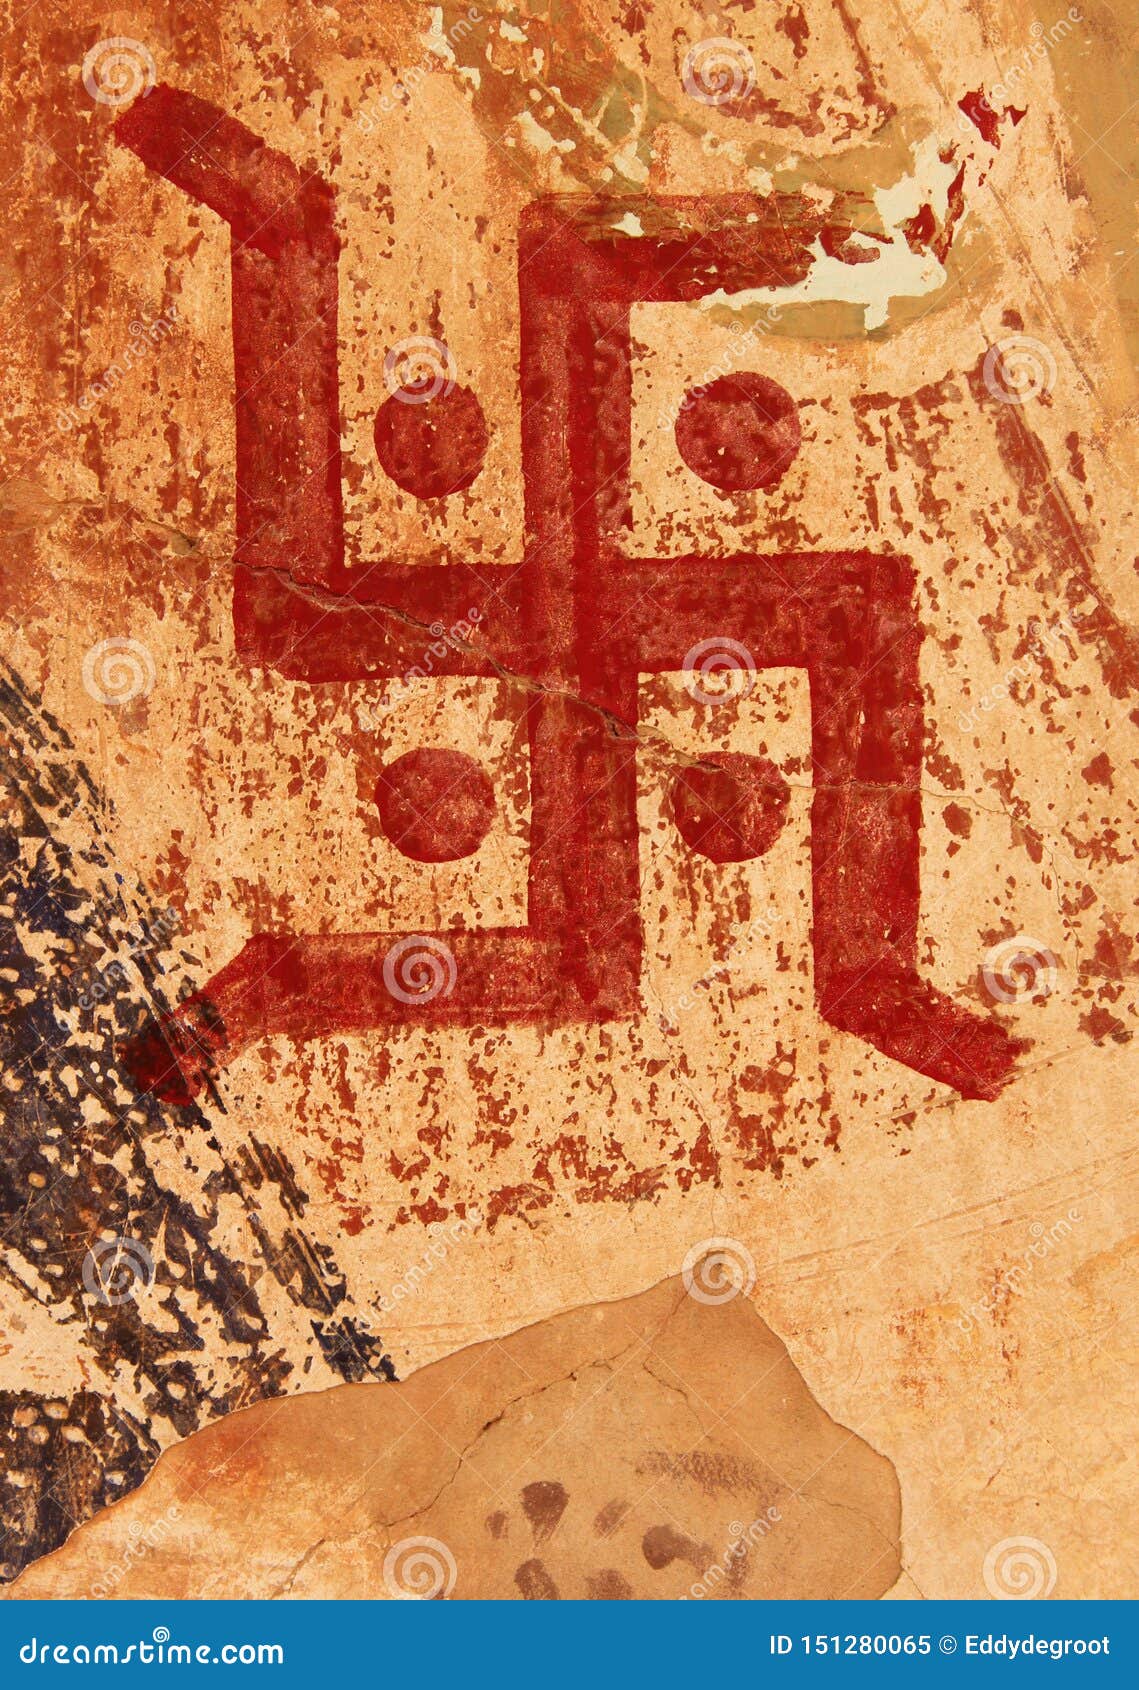 Знак похожий на свастику. Символы похожие на свастику. Индийский символ похожий на свастику.